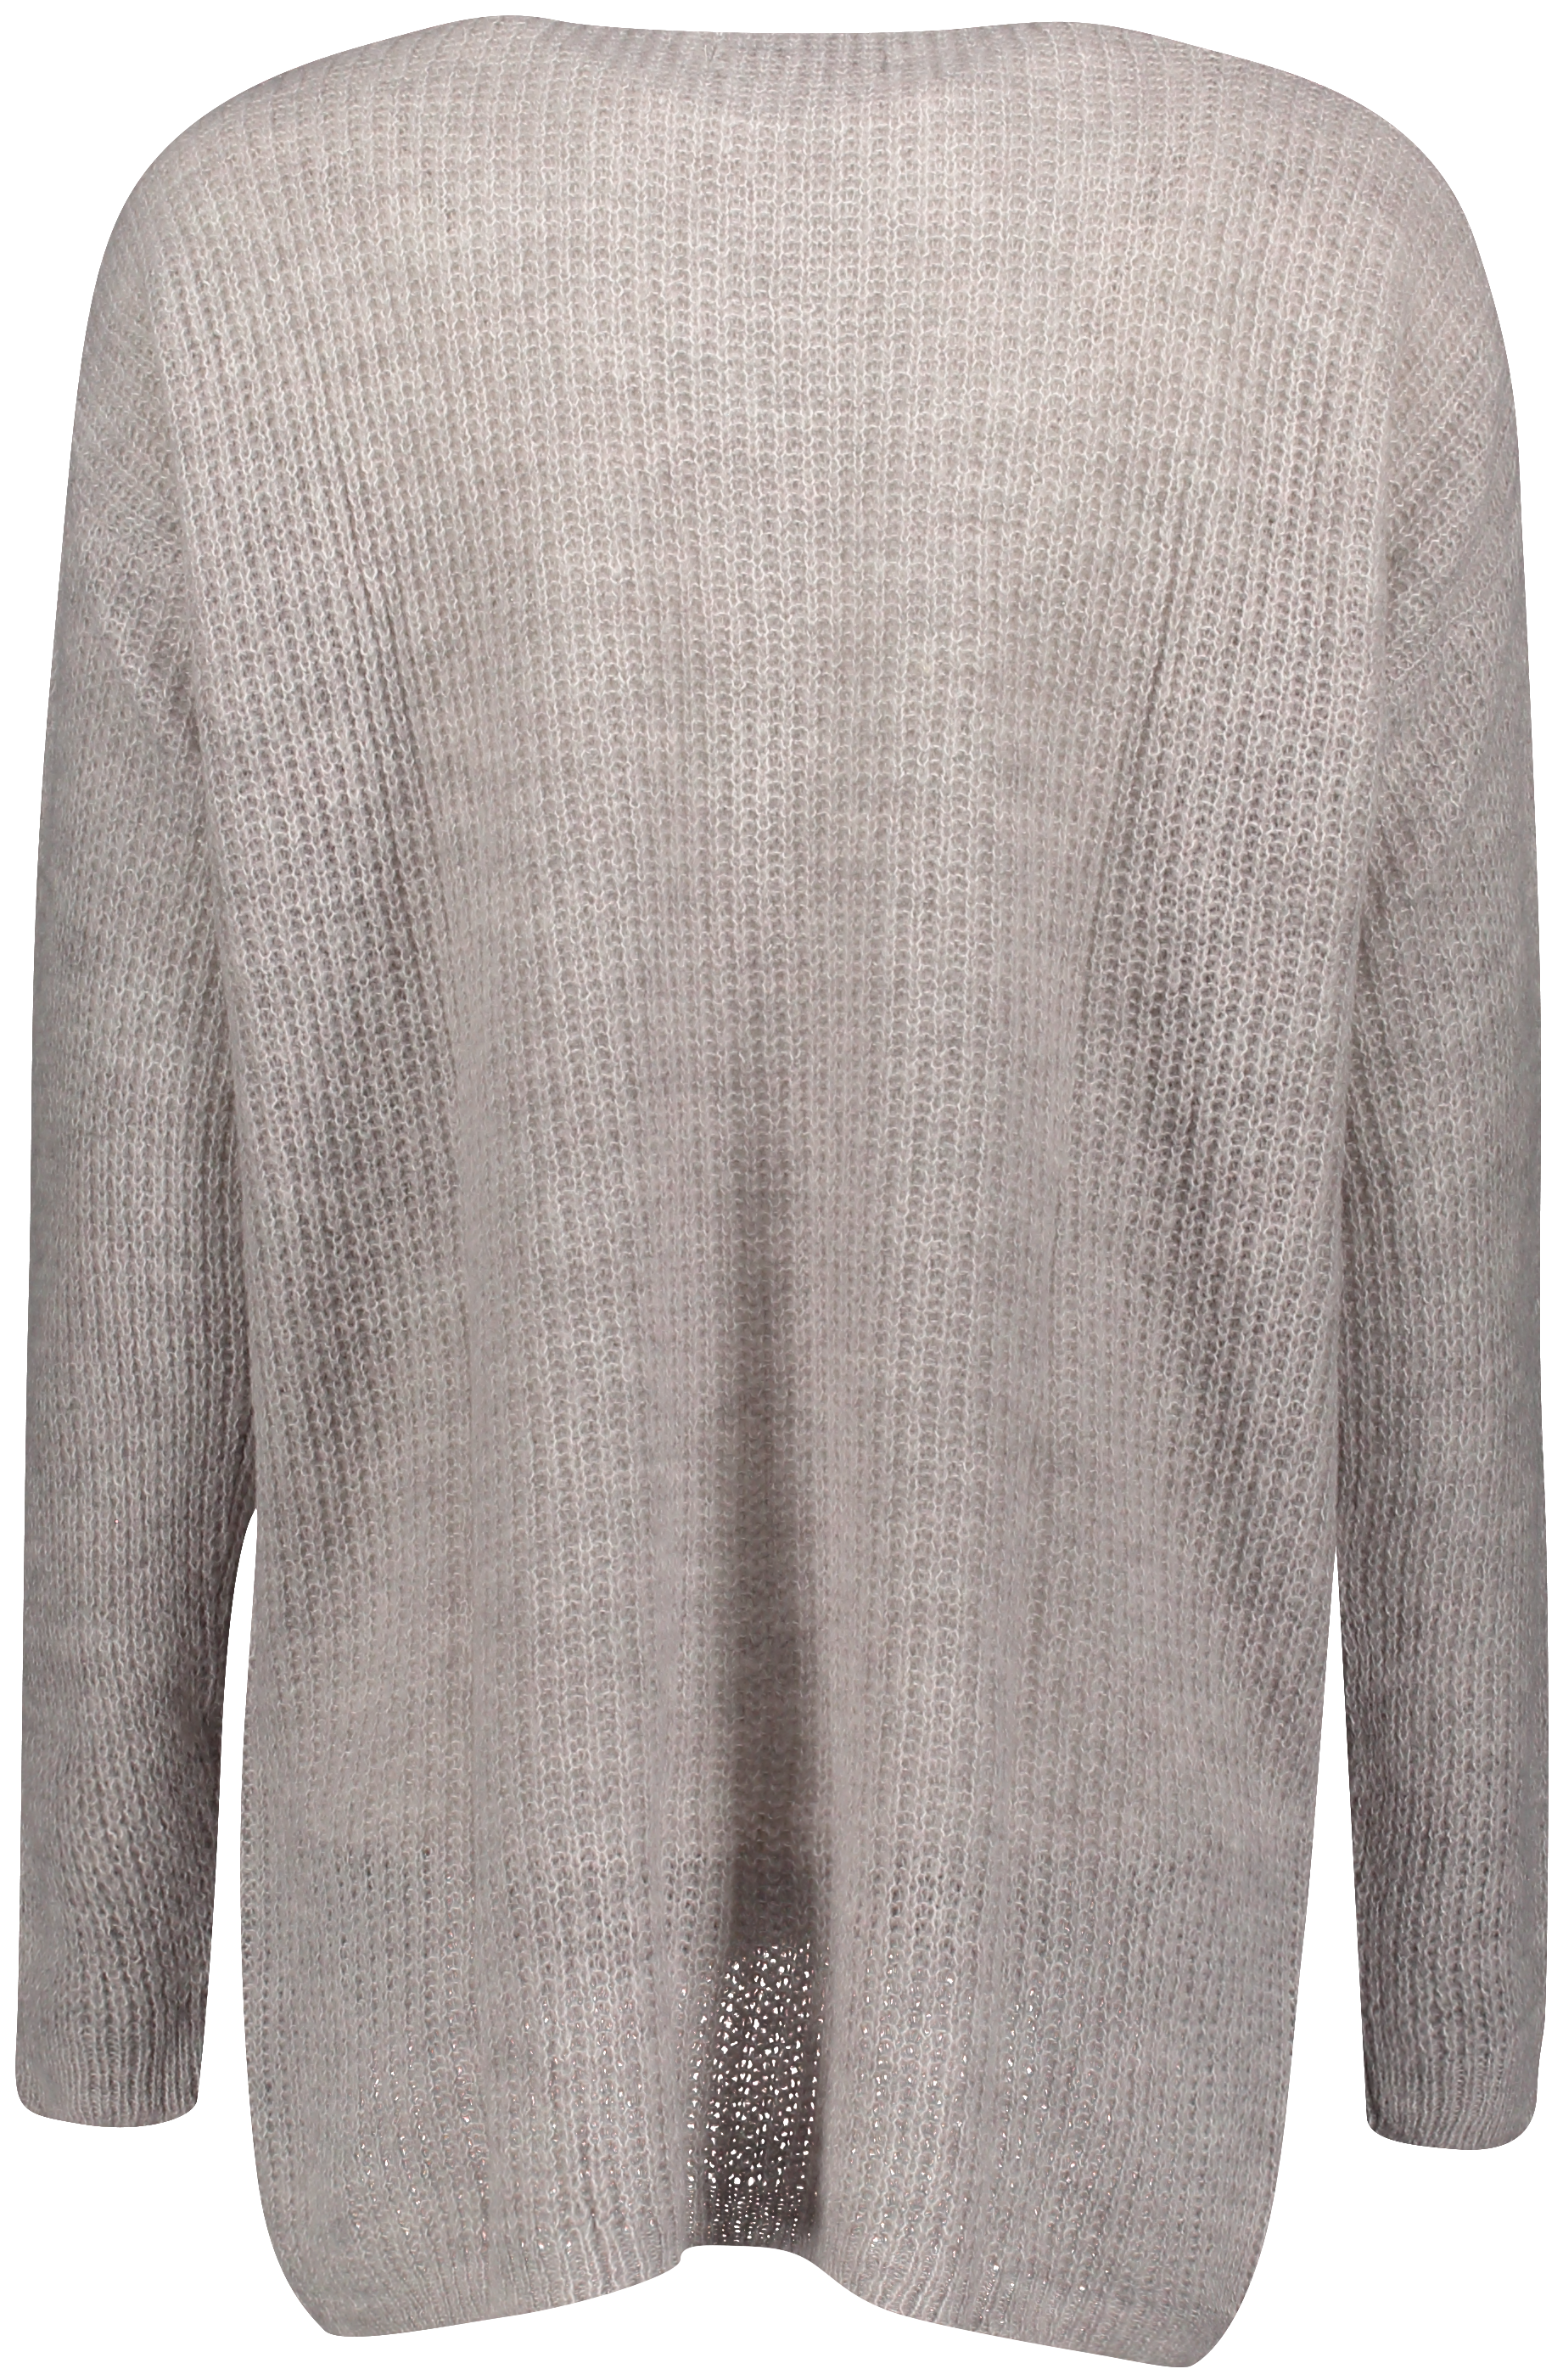 Knit Sweater in verschillende kleuren M49778327